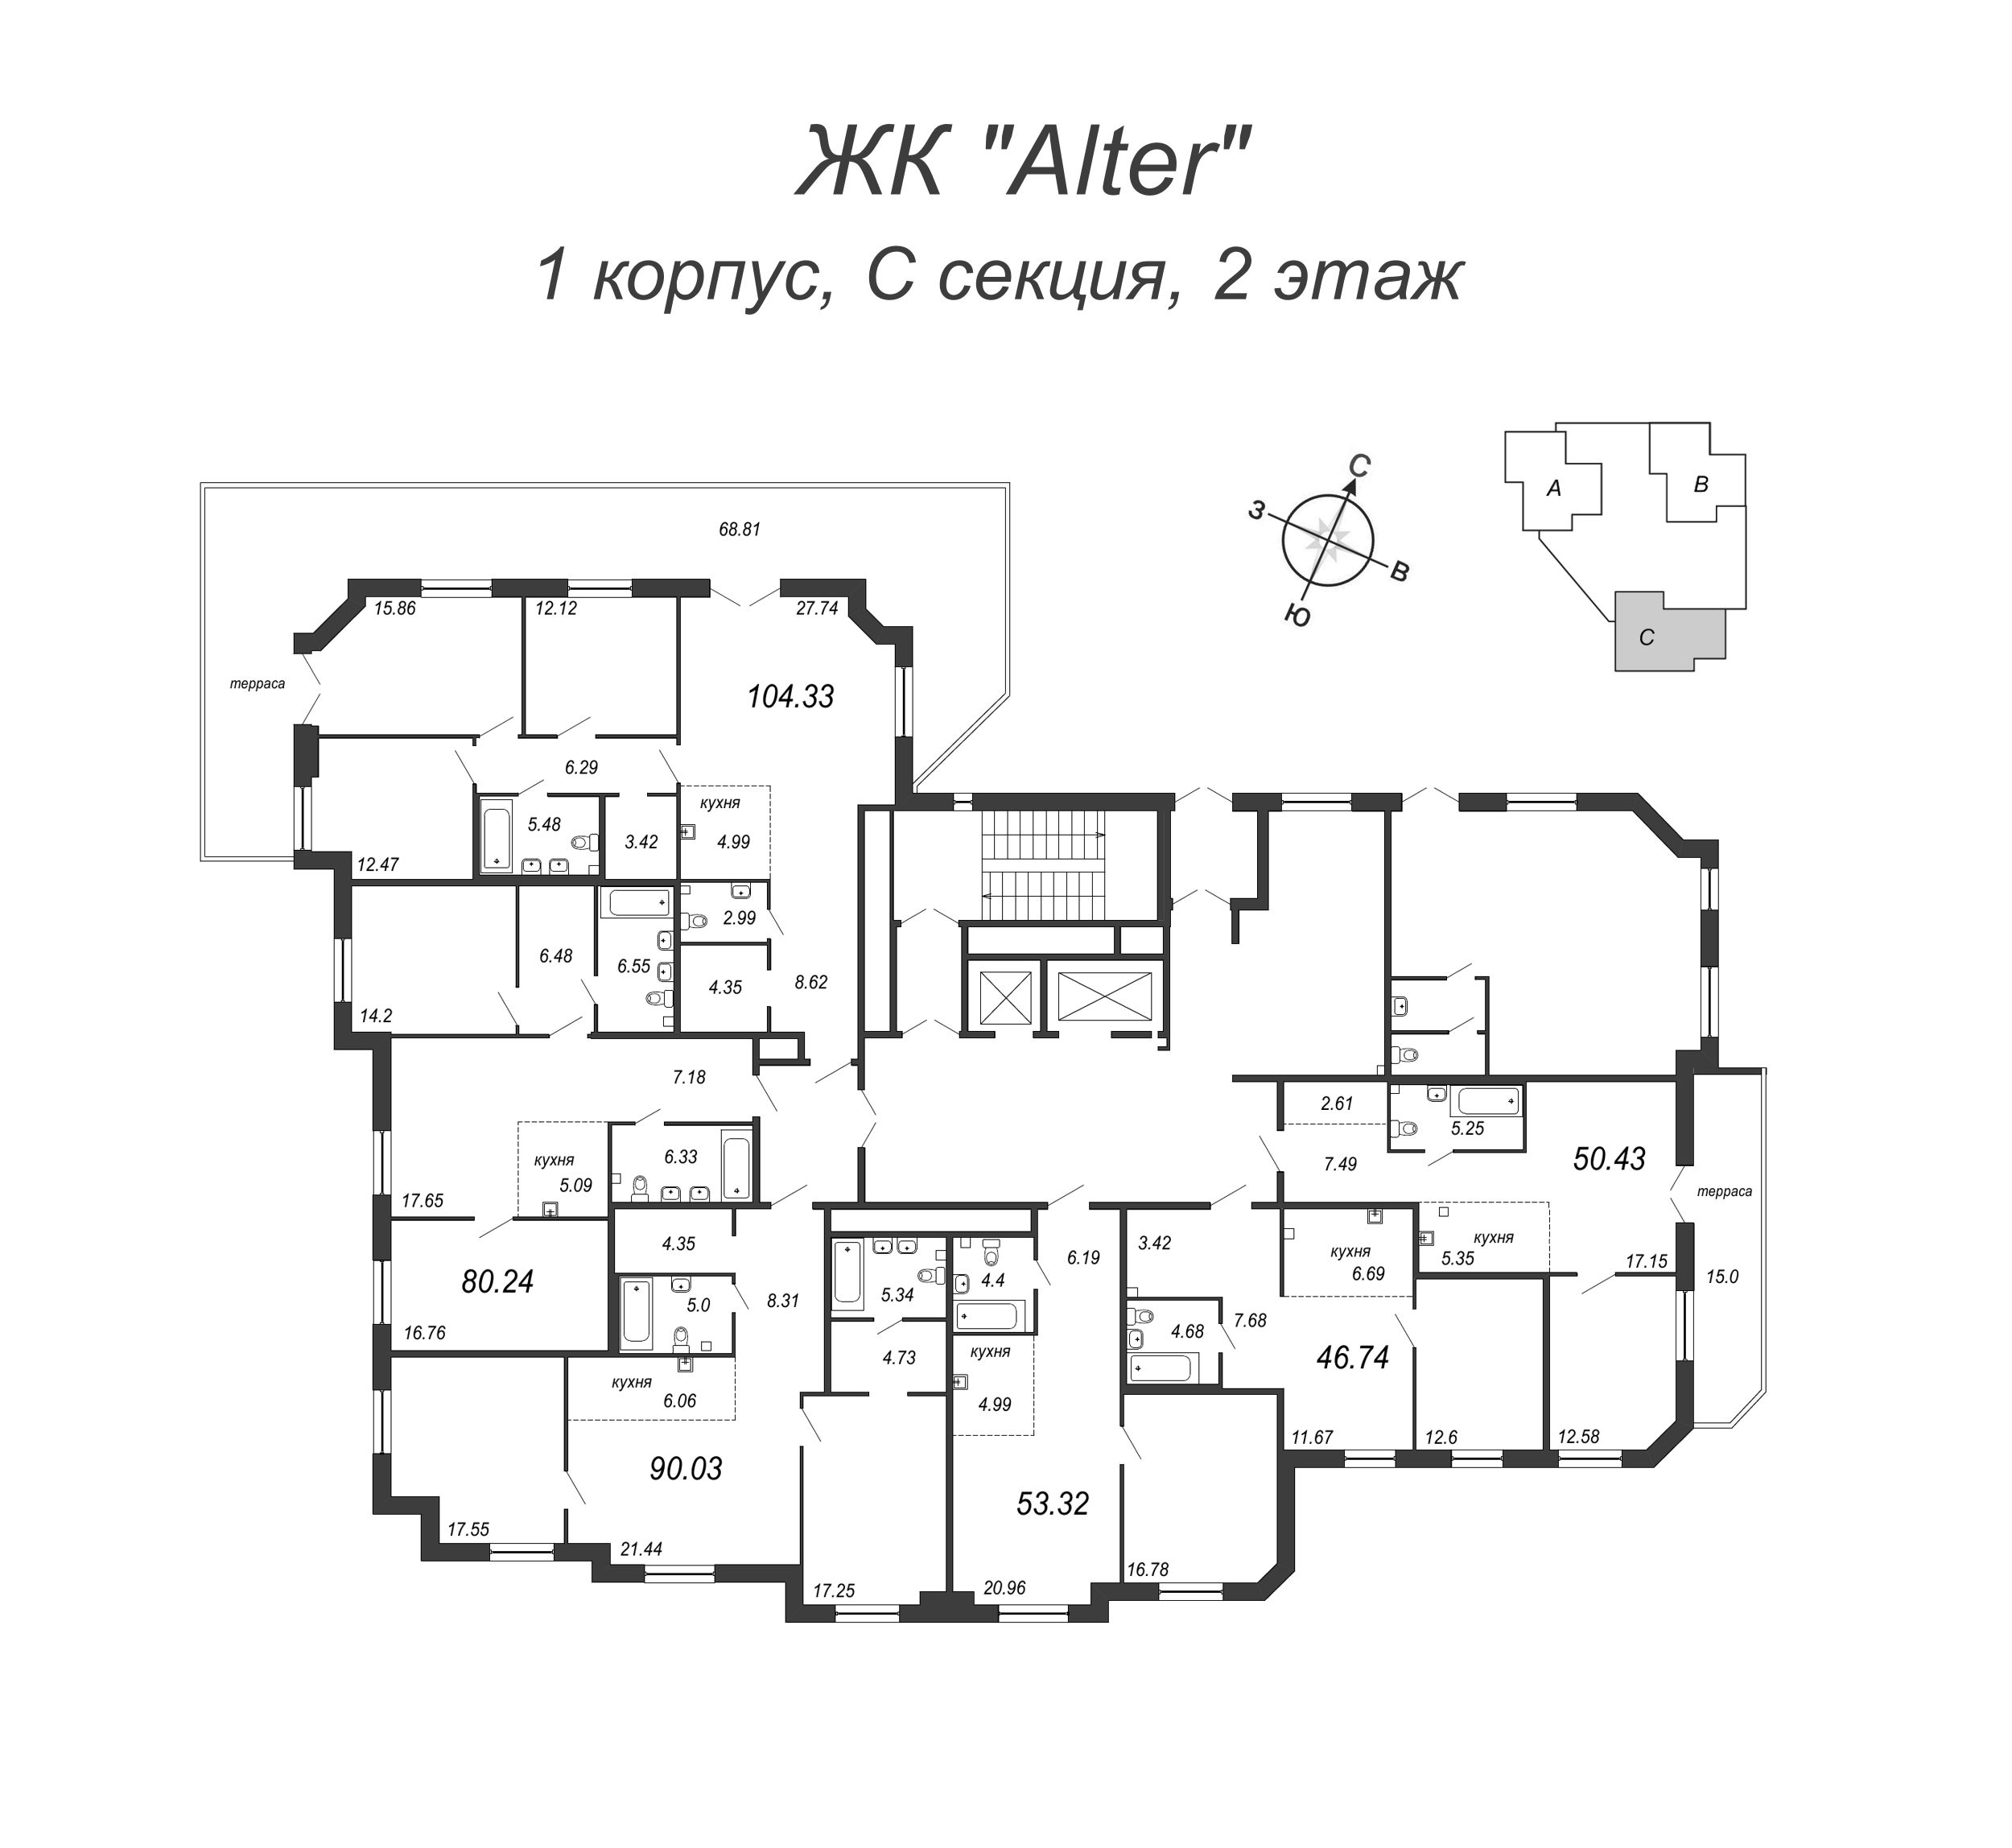 2-комнатная (Евро) квартира, 53.32 м² - планировка этажа